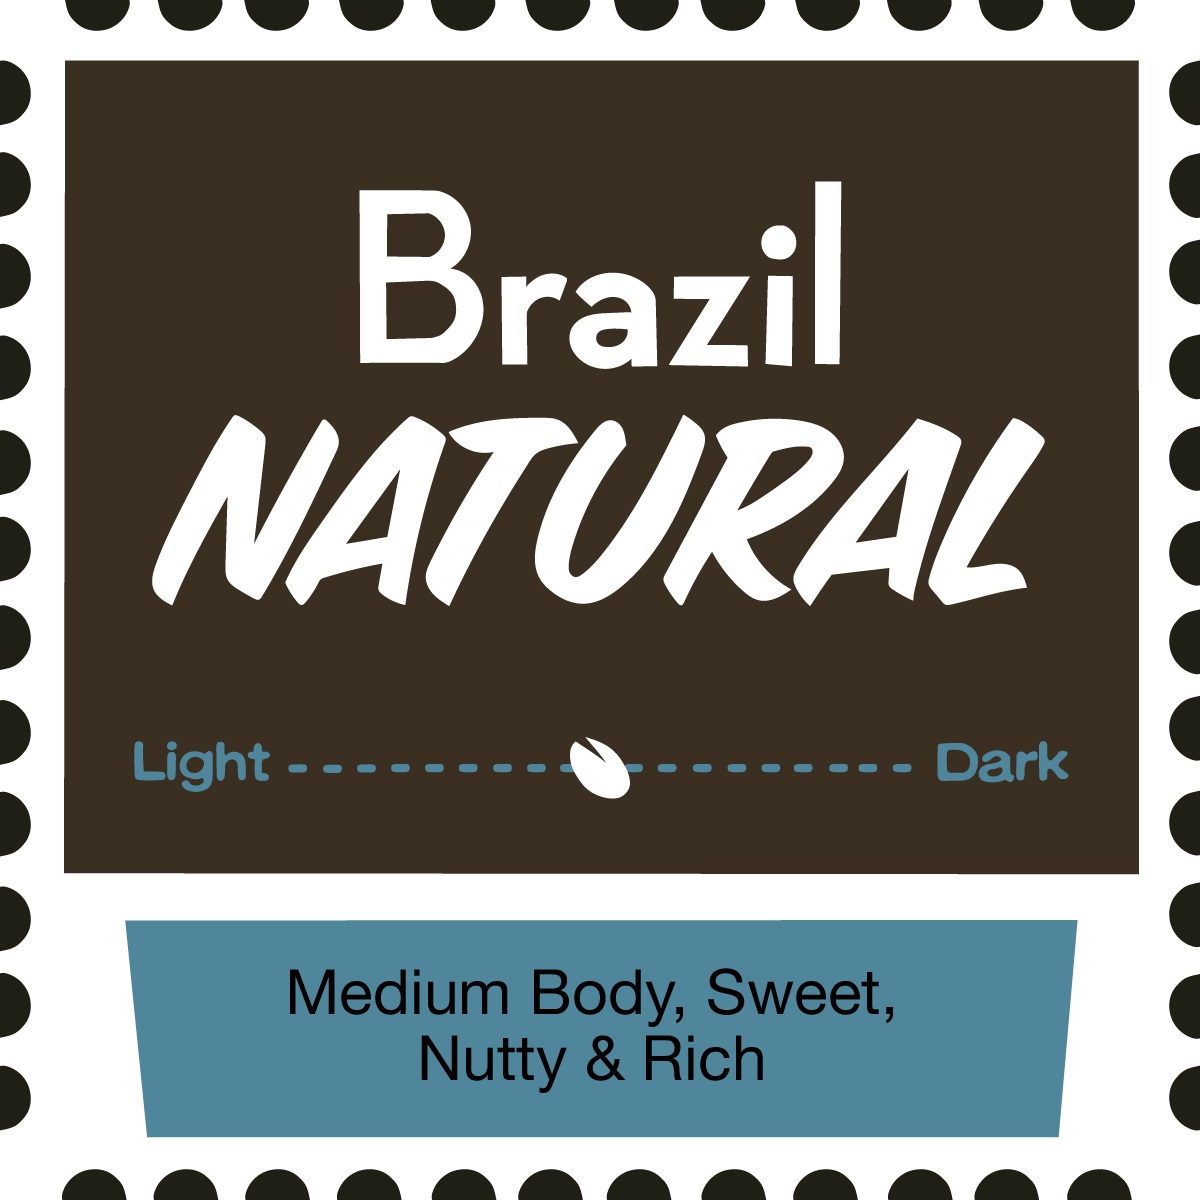 Brazil Natural